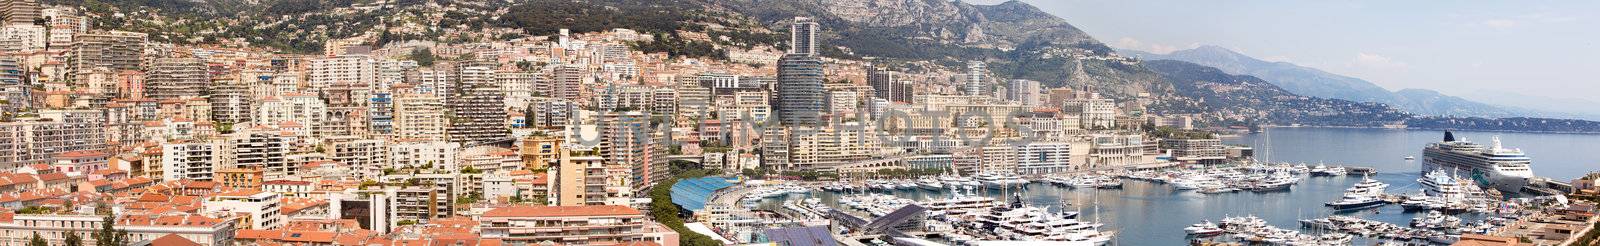 Monaco, Monte Carlo by leaf